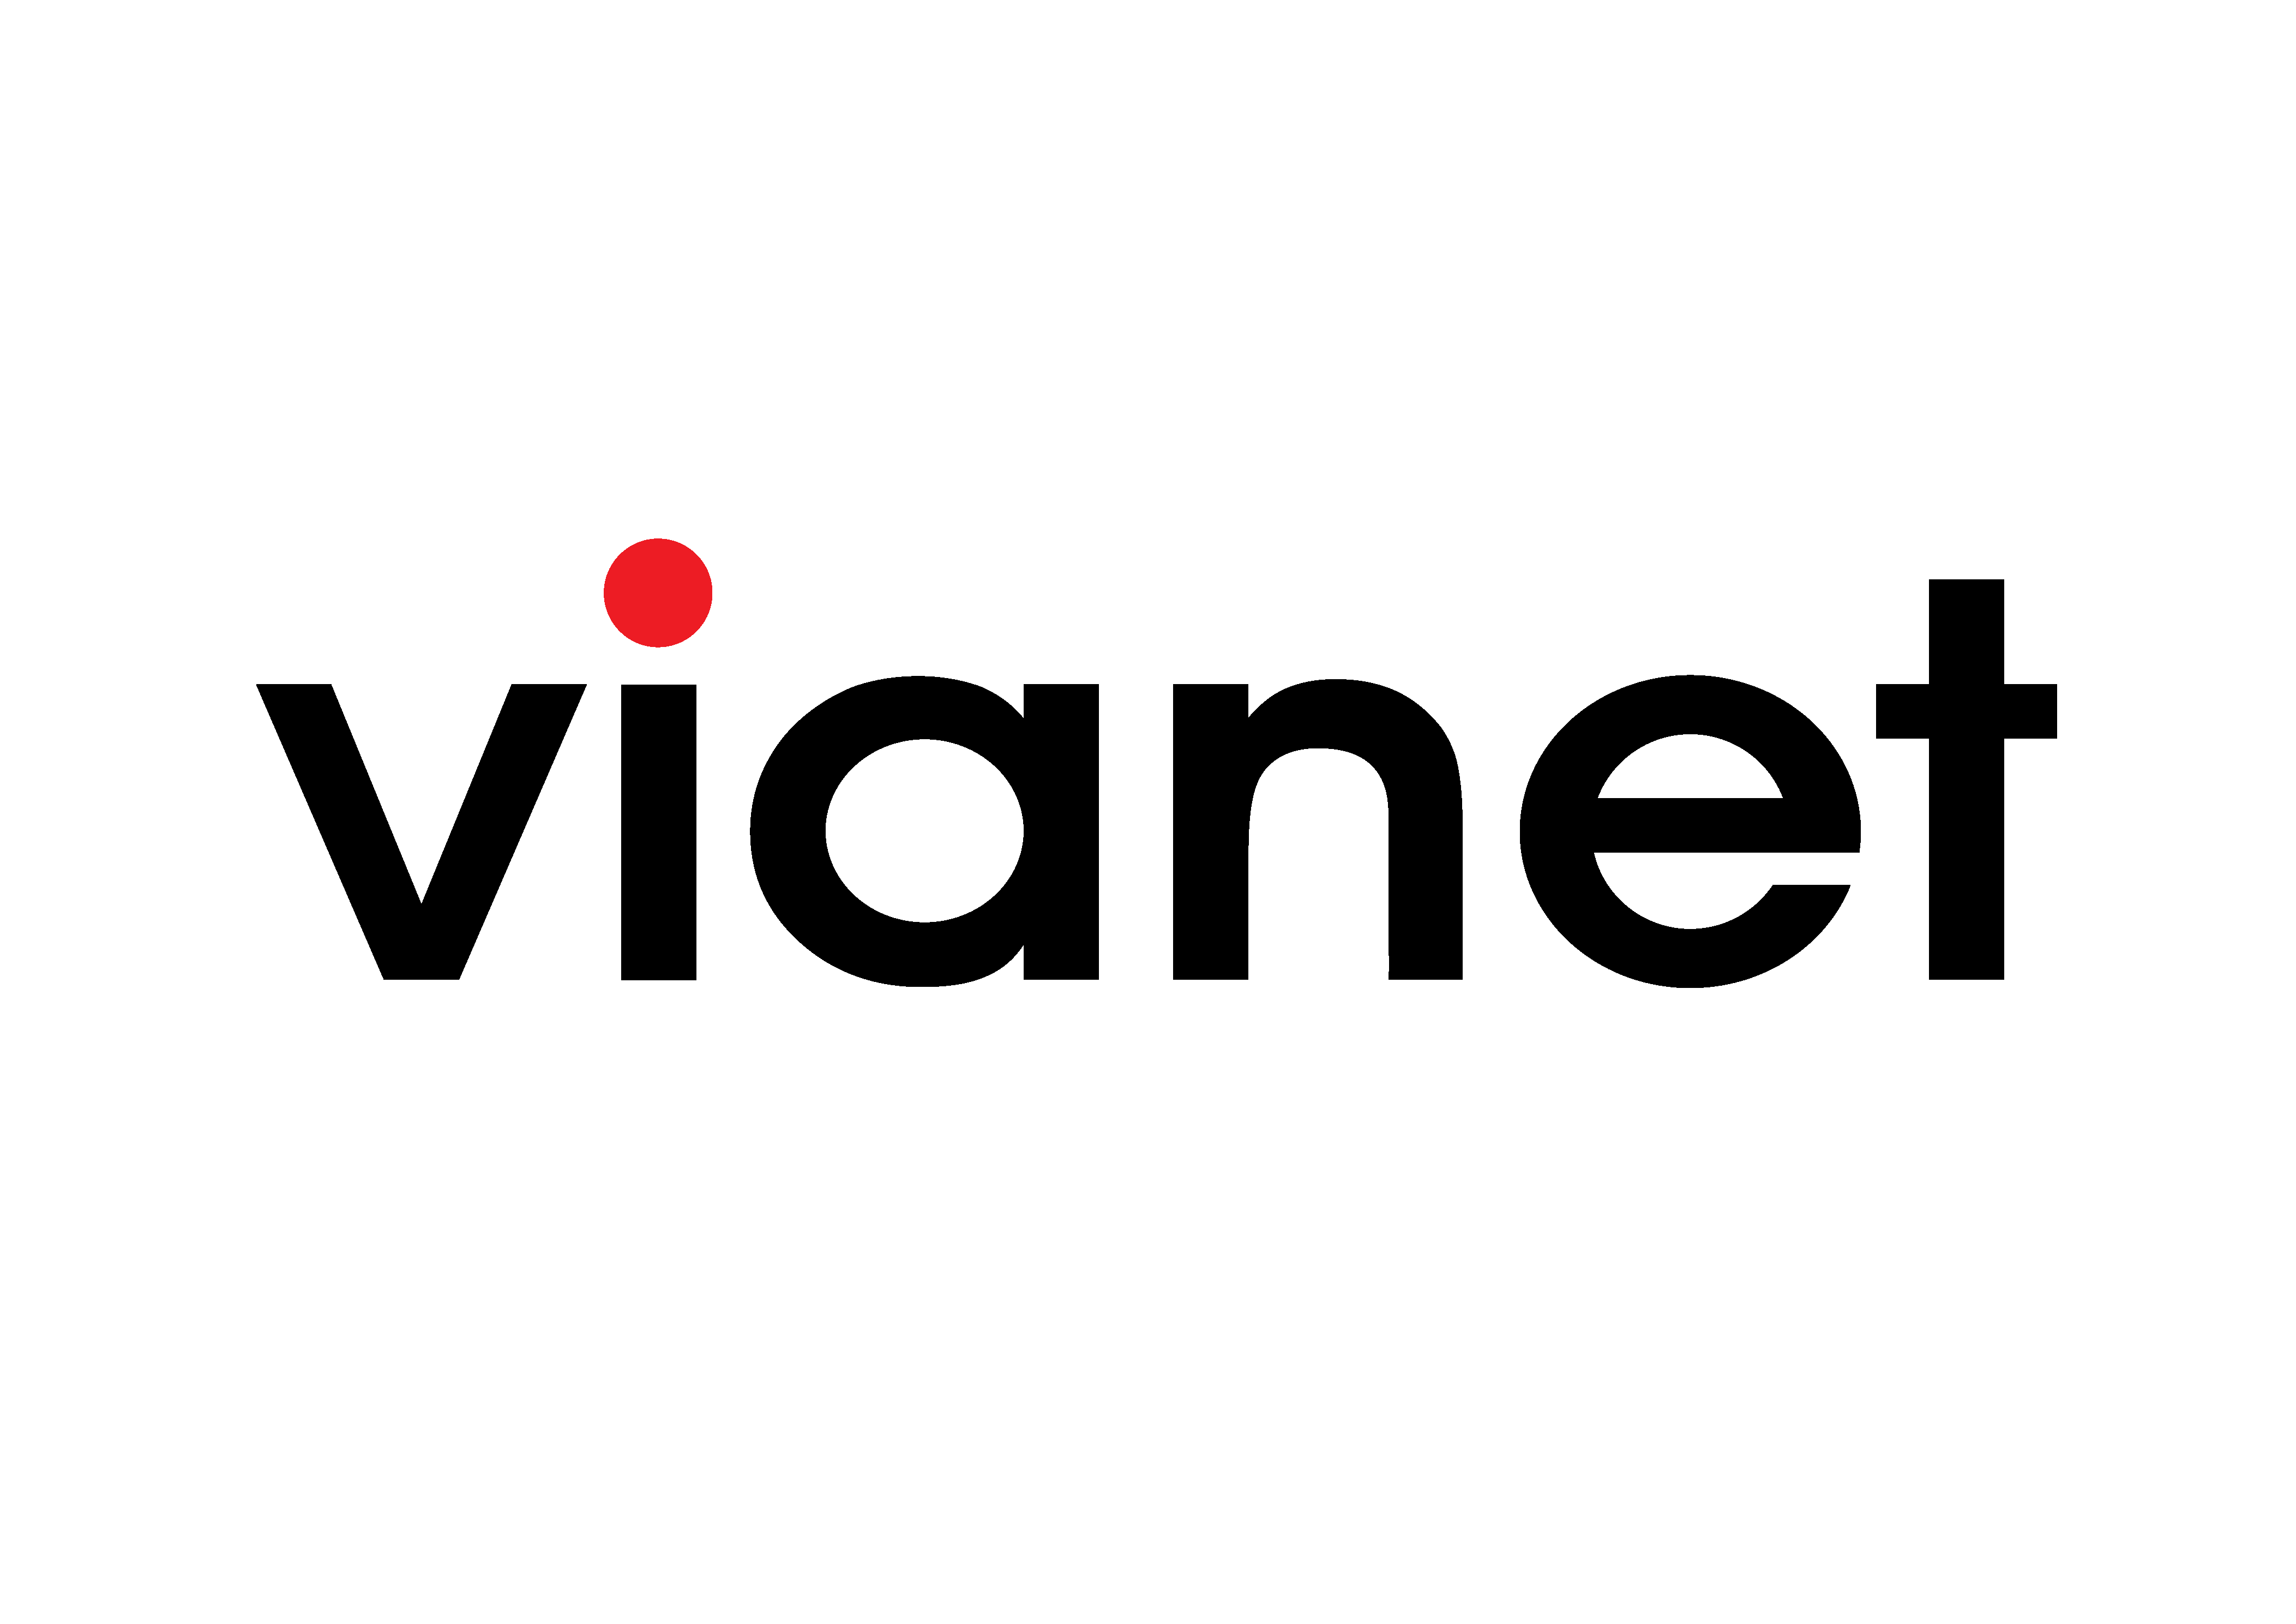 Vianet